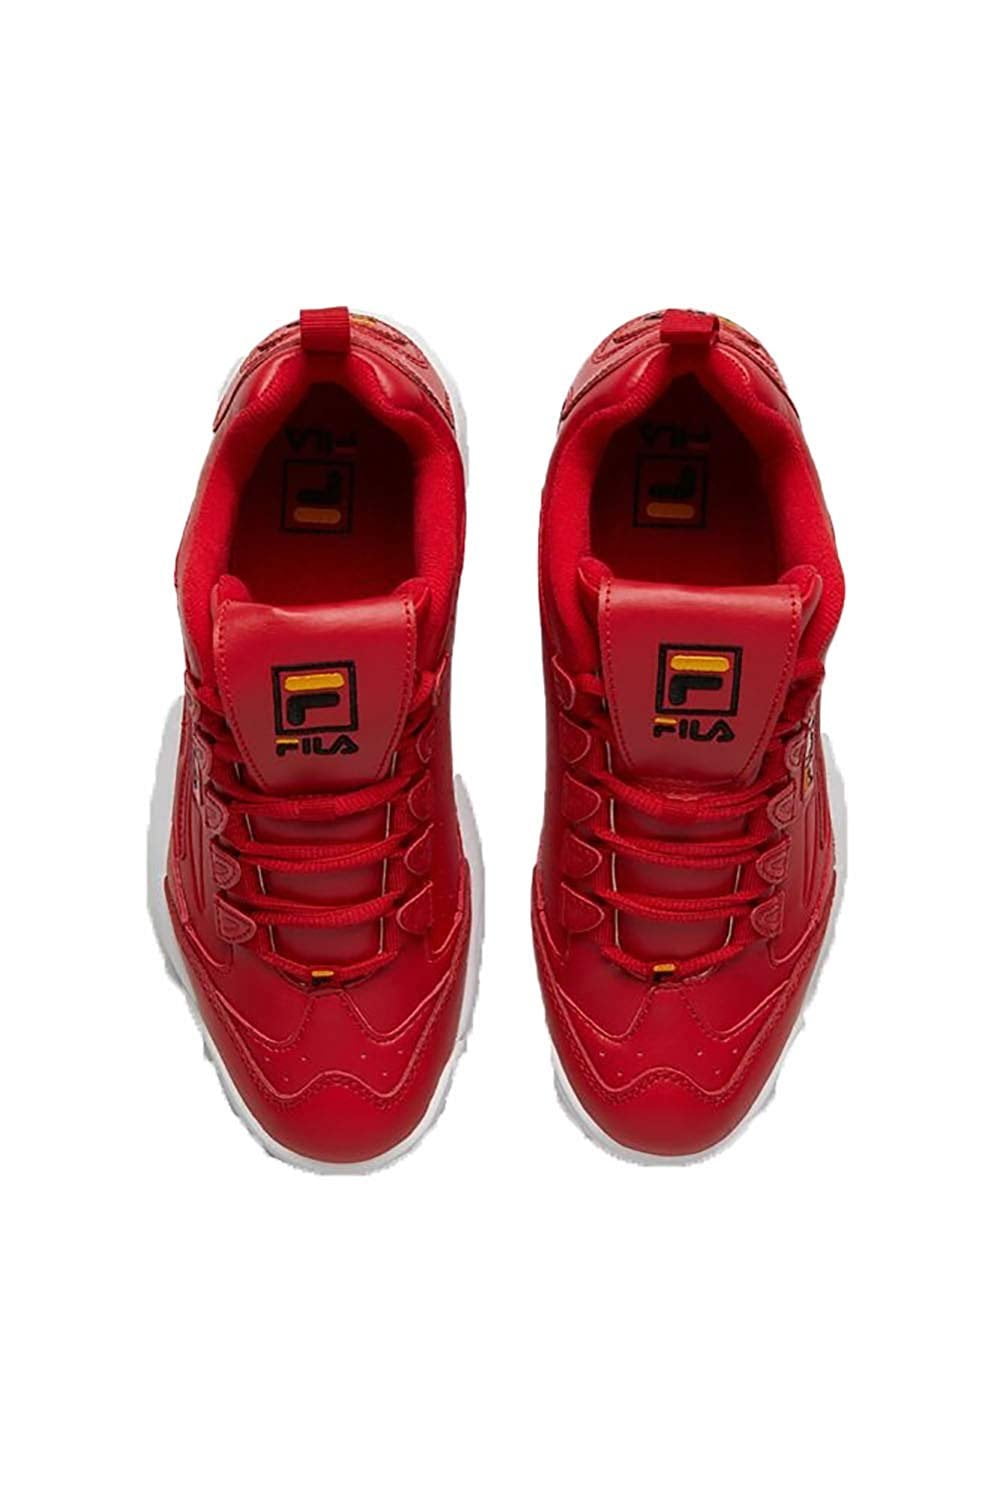 FILA Men's III Sneakers (11.5 M US, Red/White) - Walmart.com